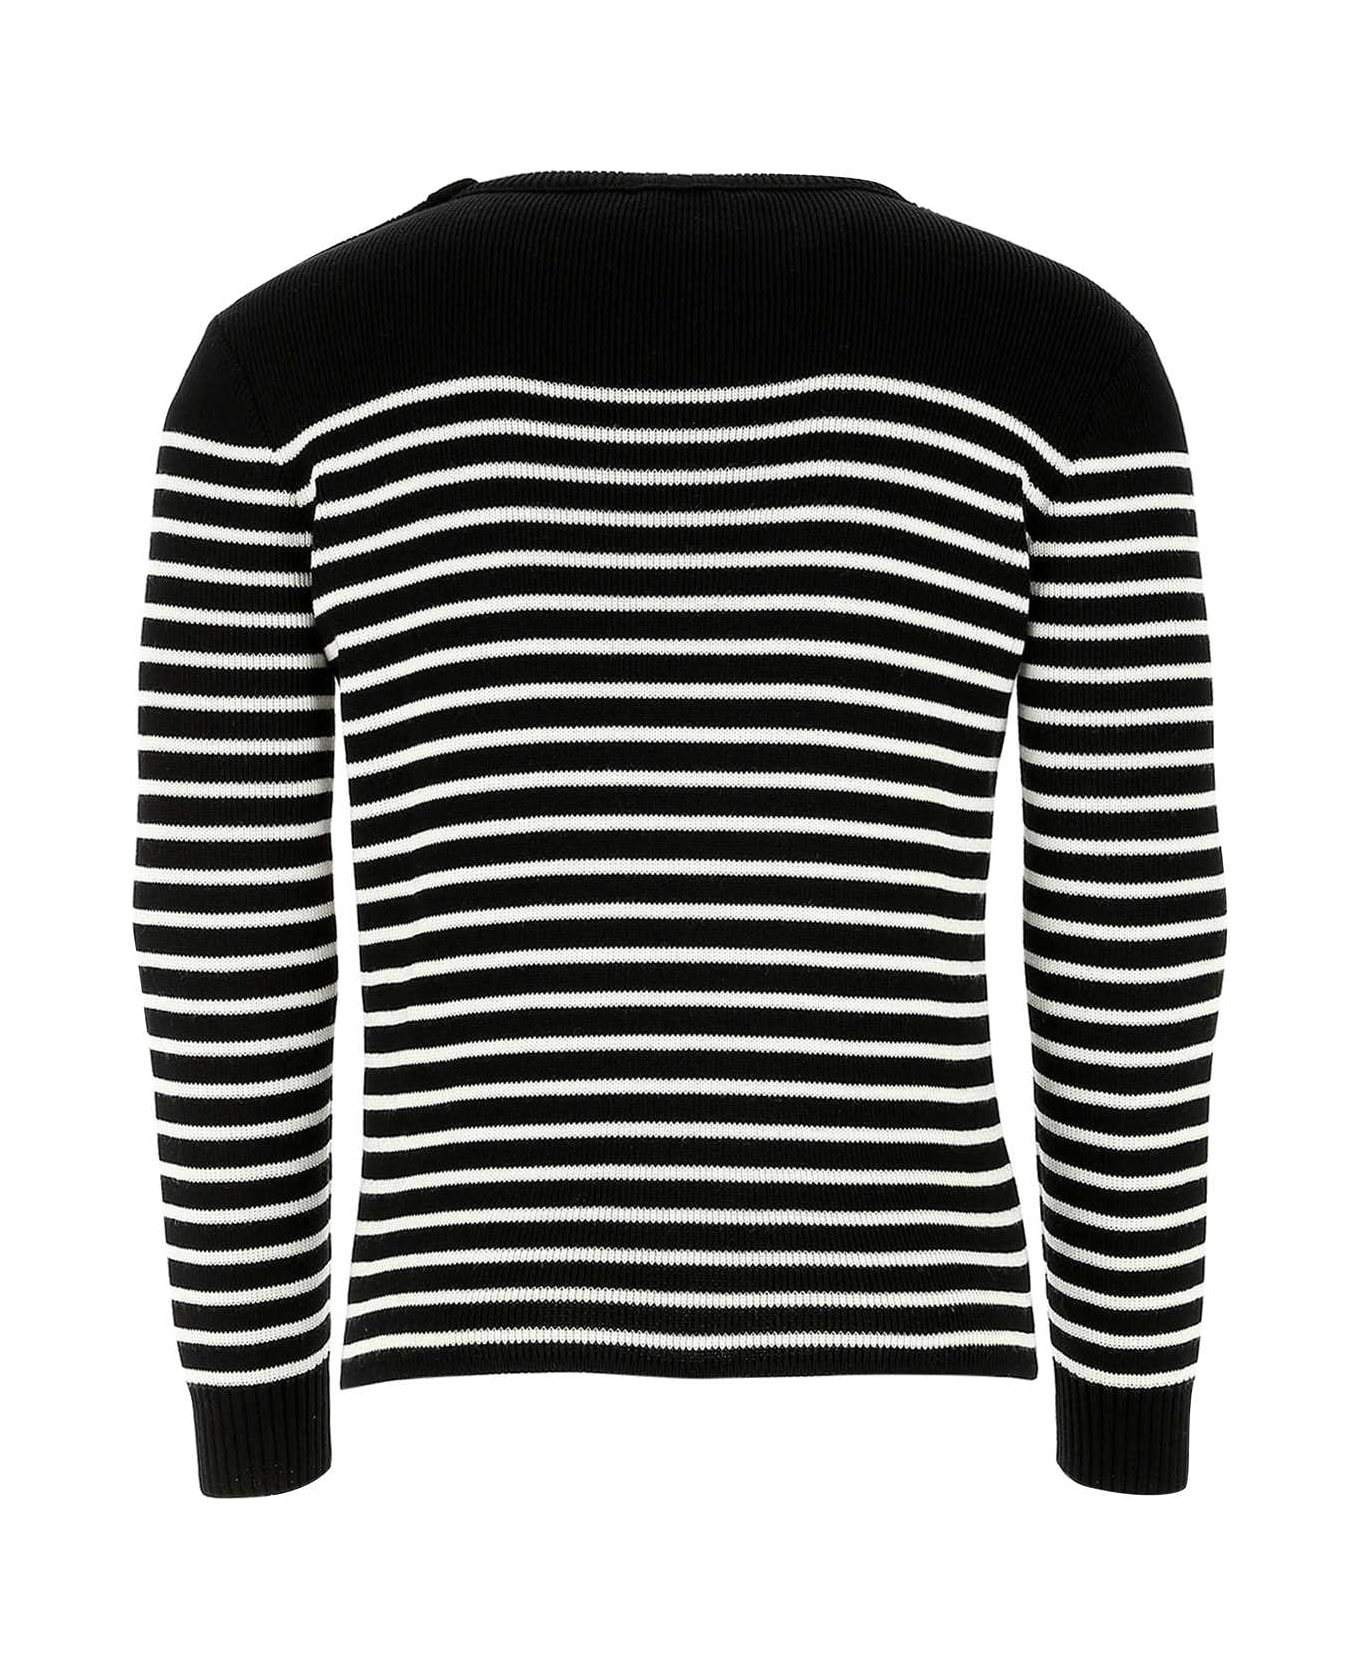 Saint Laurent Embroidered Cotton Blend Sweater - 1095